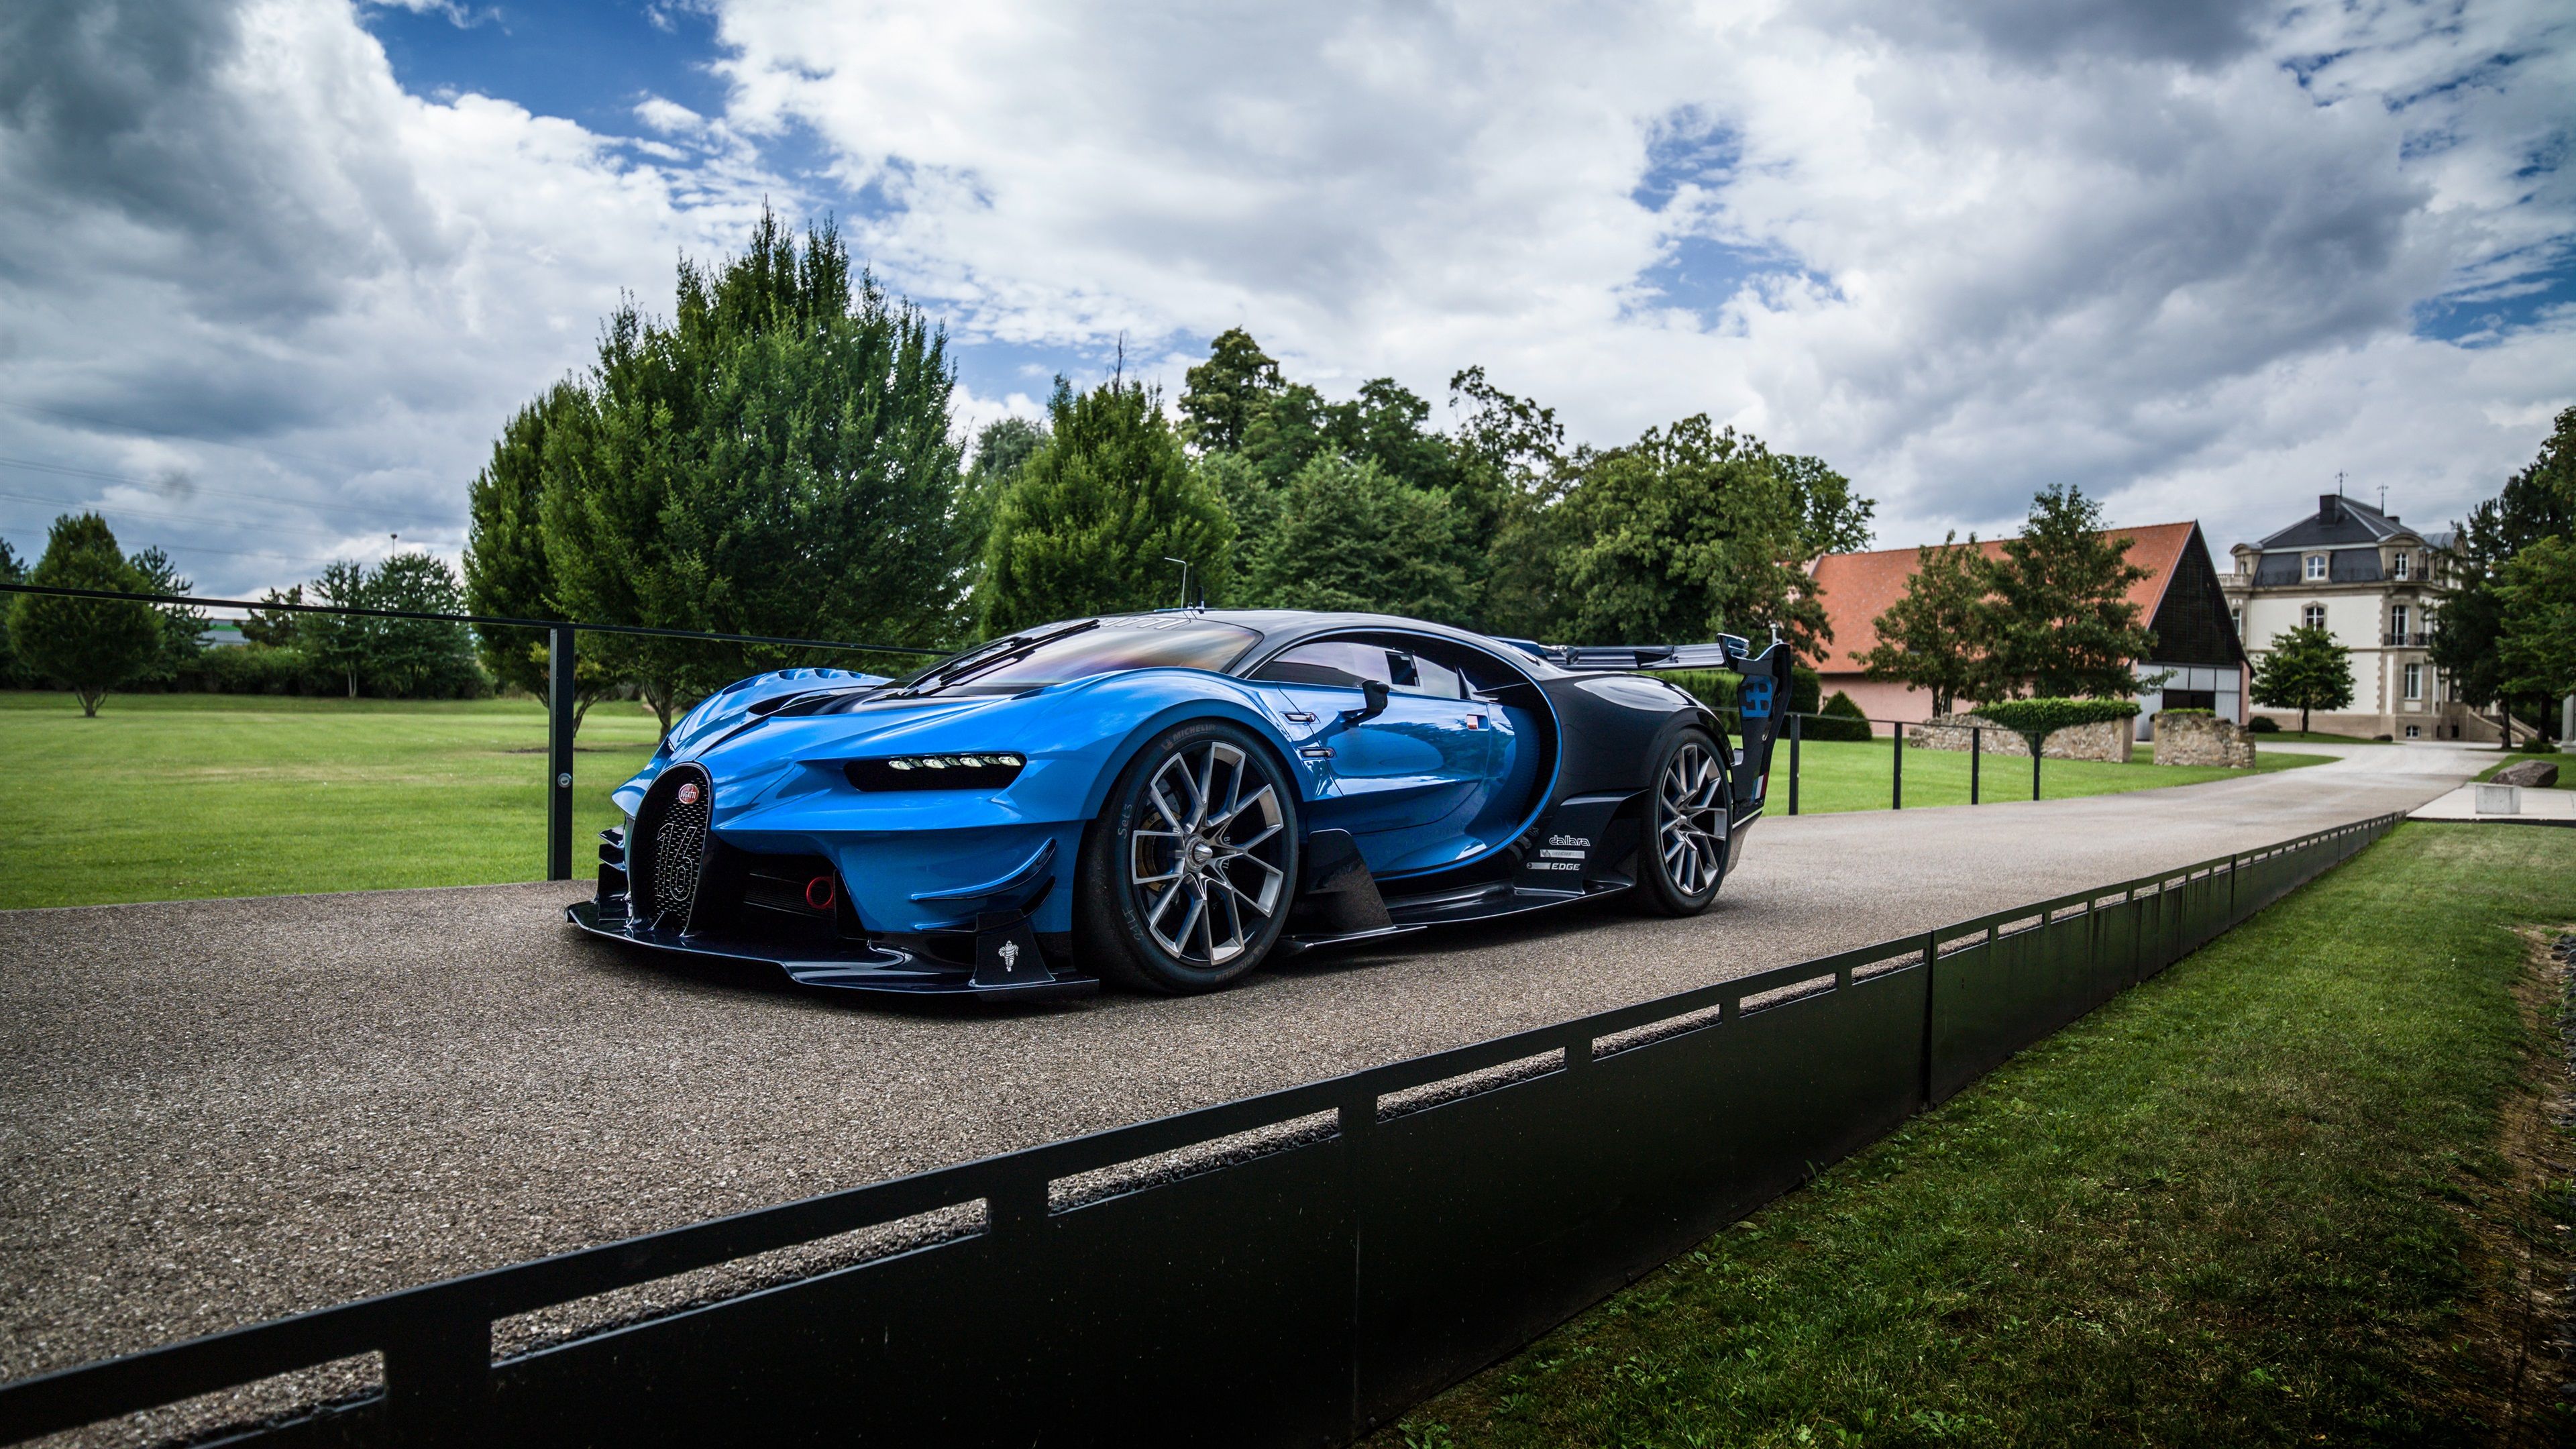 Wallpaper Bugatti Vision Gran Turismo blue hypercar, road, clouds